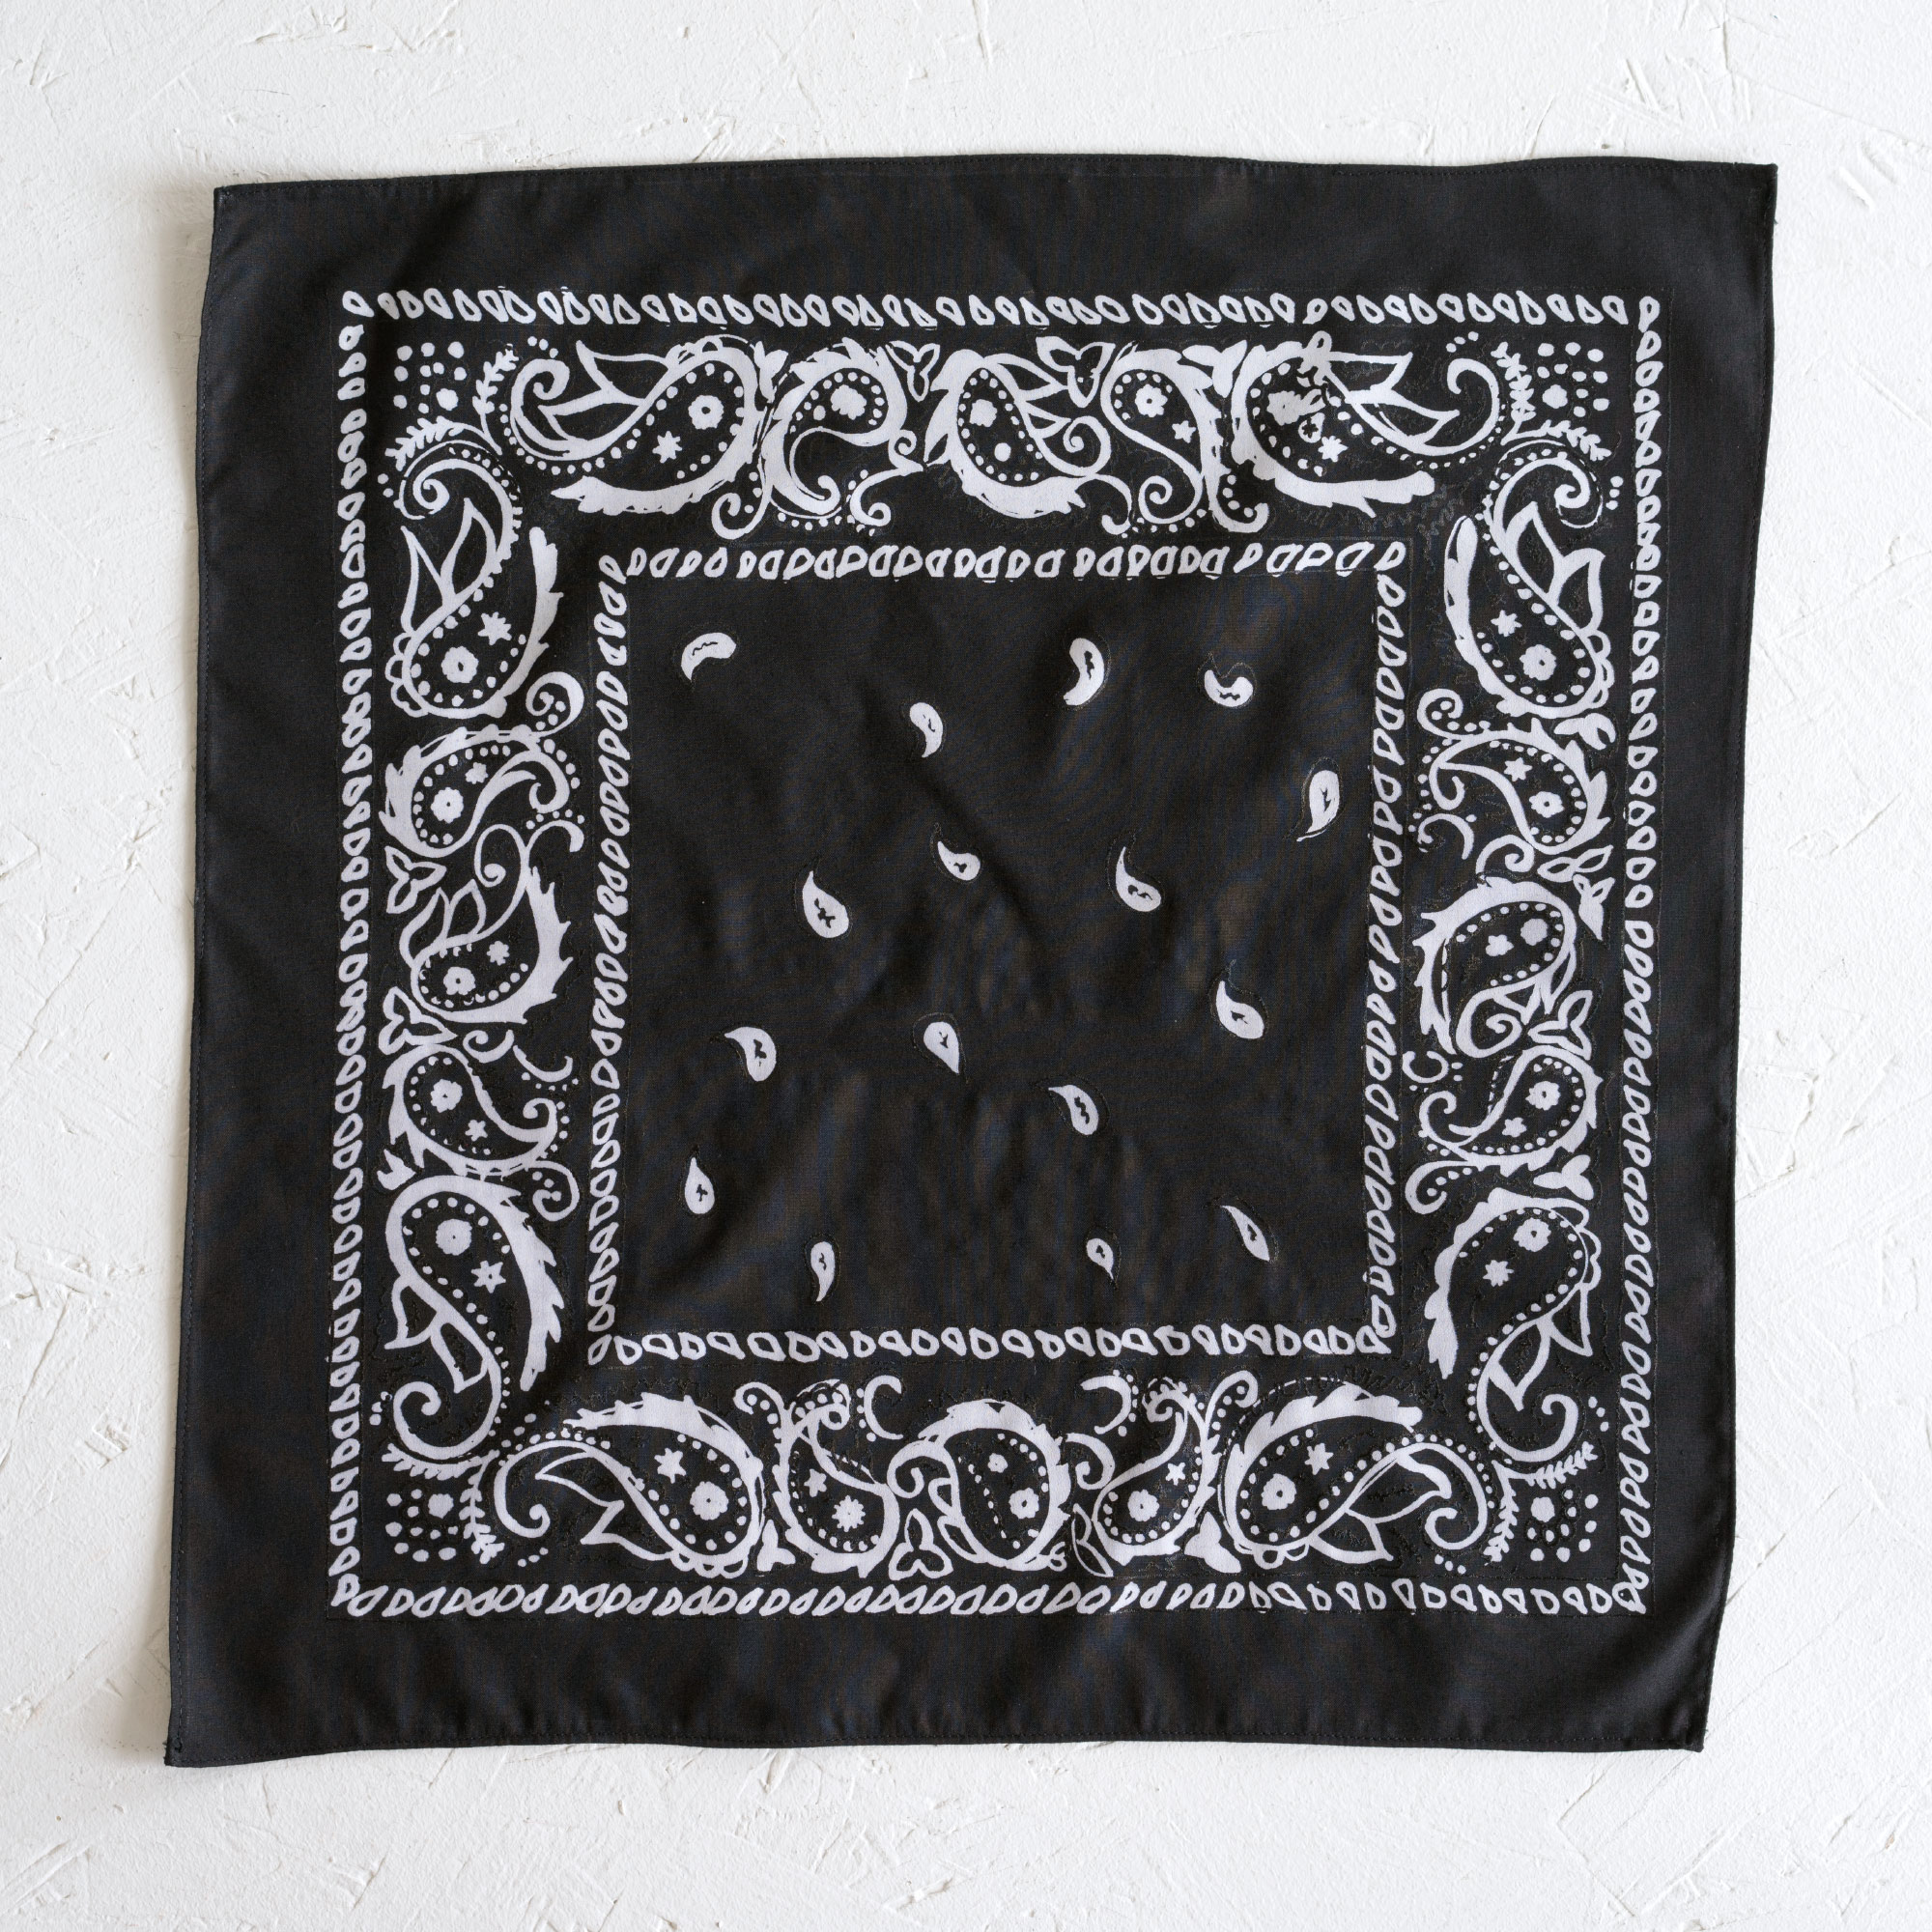 Nancy Davidson, *Hanky Code* (Black), 2016, Two color silkscreen on hand cut & sewn cotton, 17 x 17 inches (43.18 x 43.18 cm)